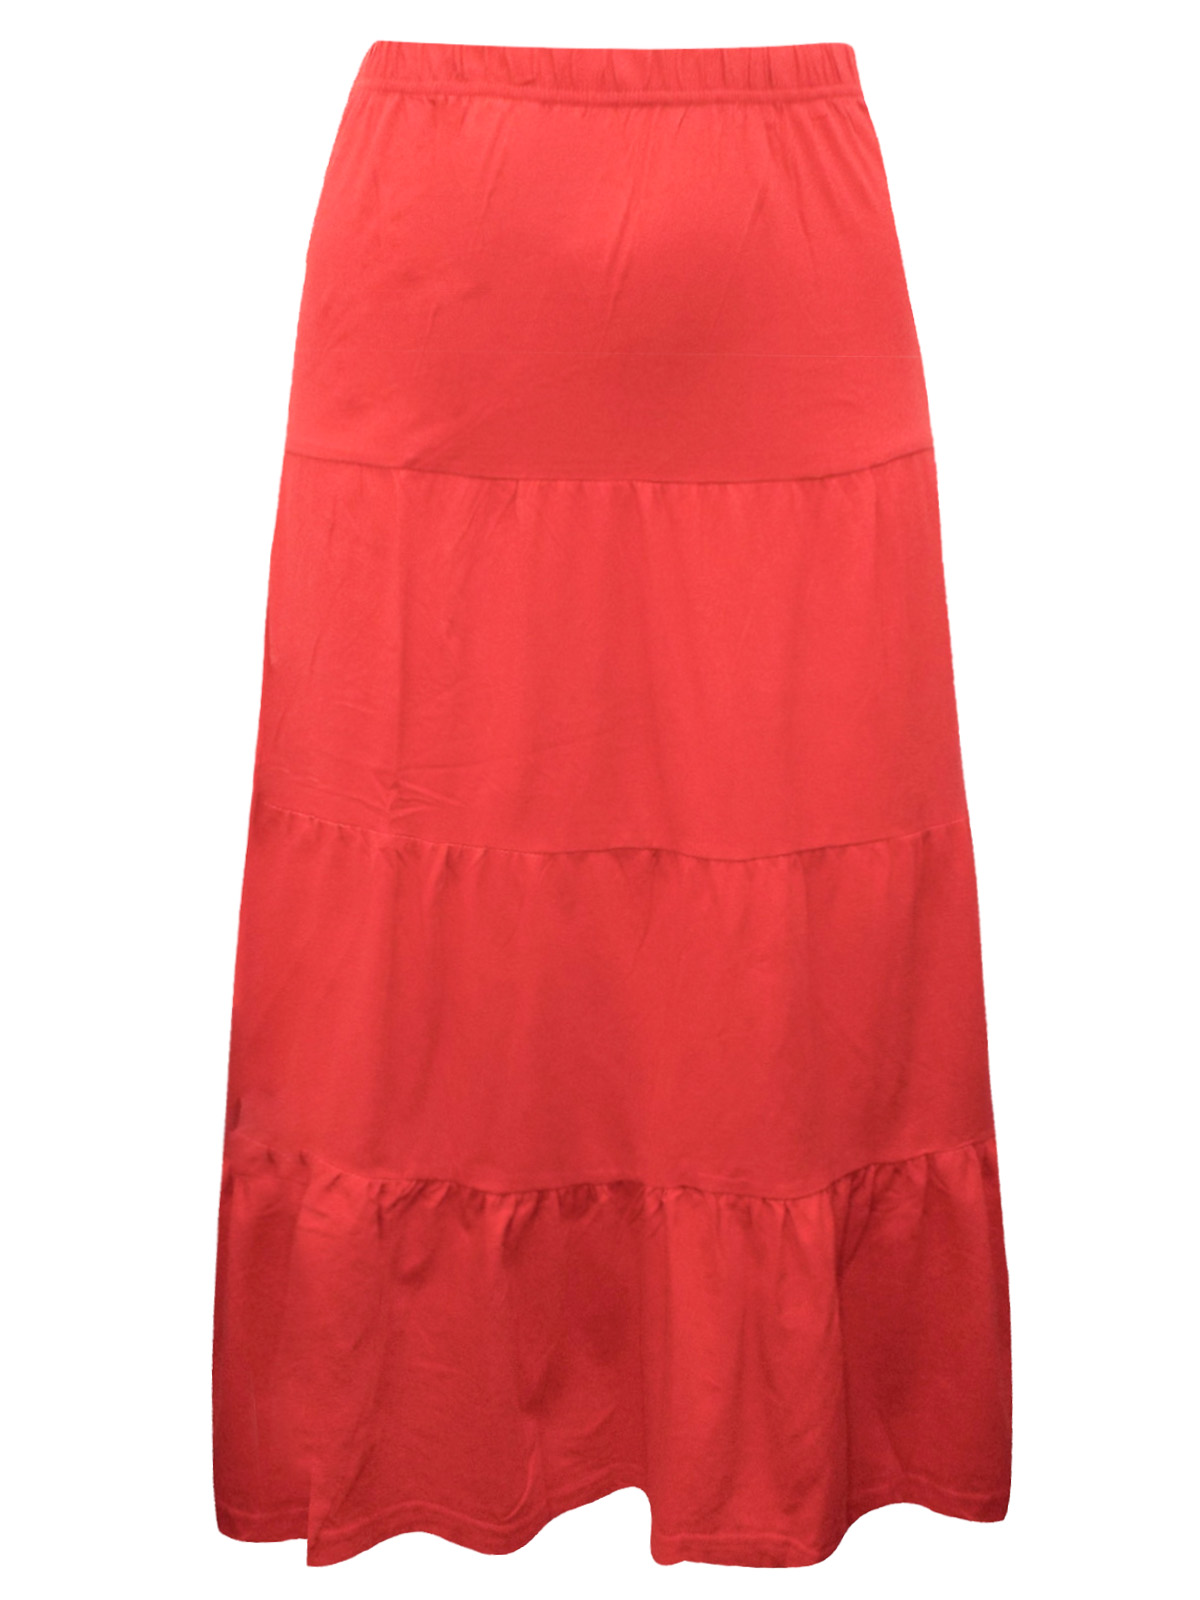 Julipa - - Julipa RED Tiered Maxi Skirt - Plus Size 14 to 24